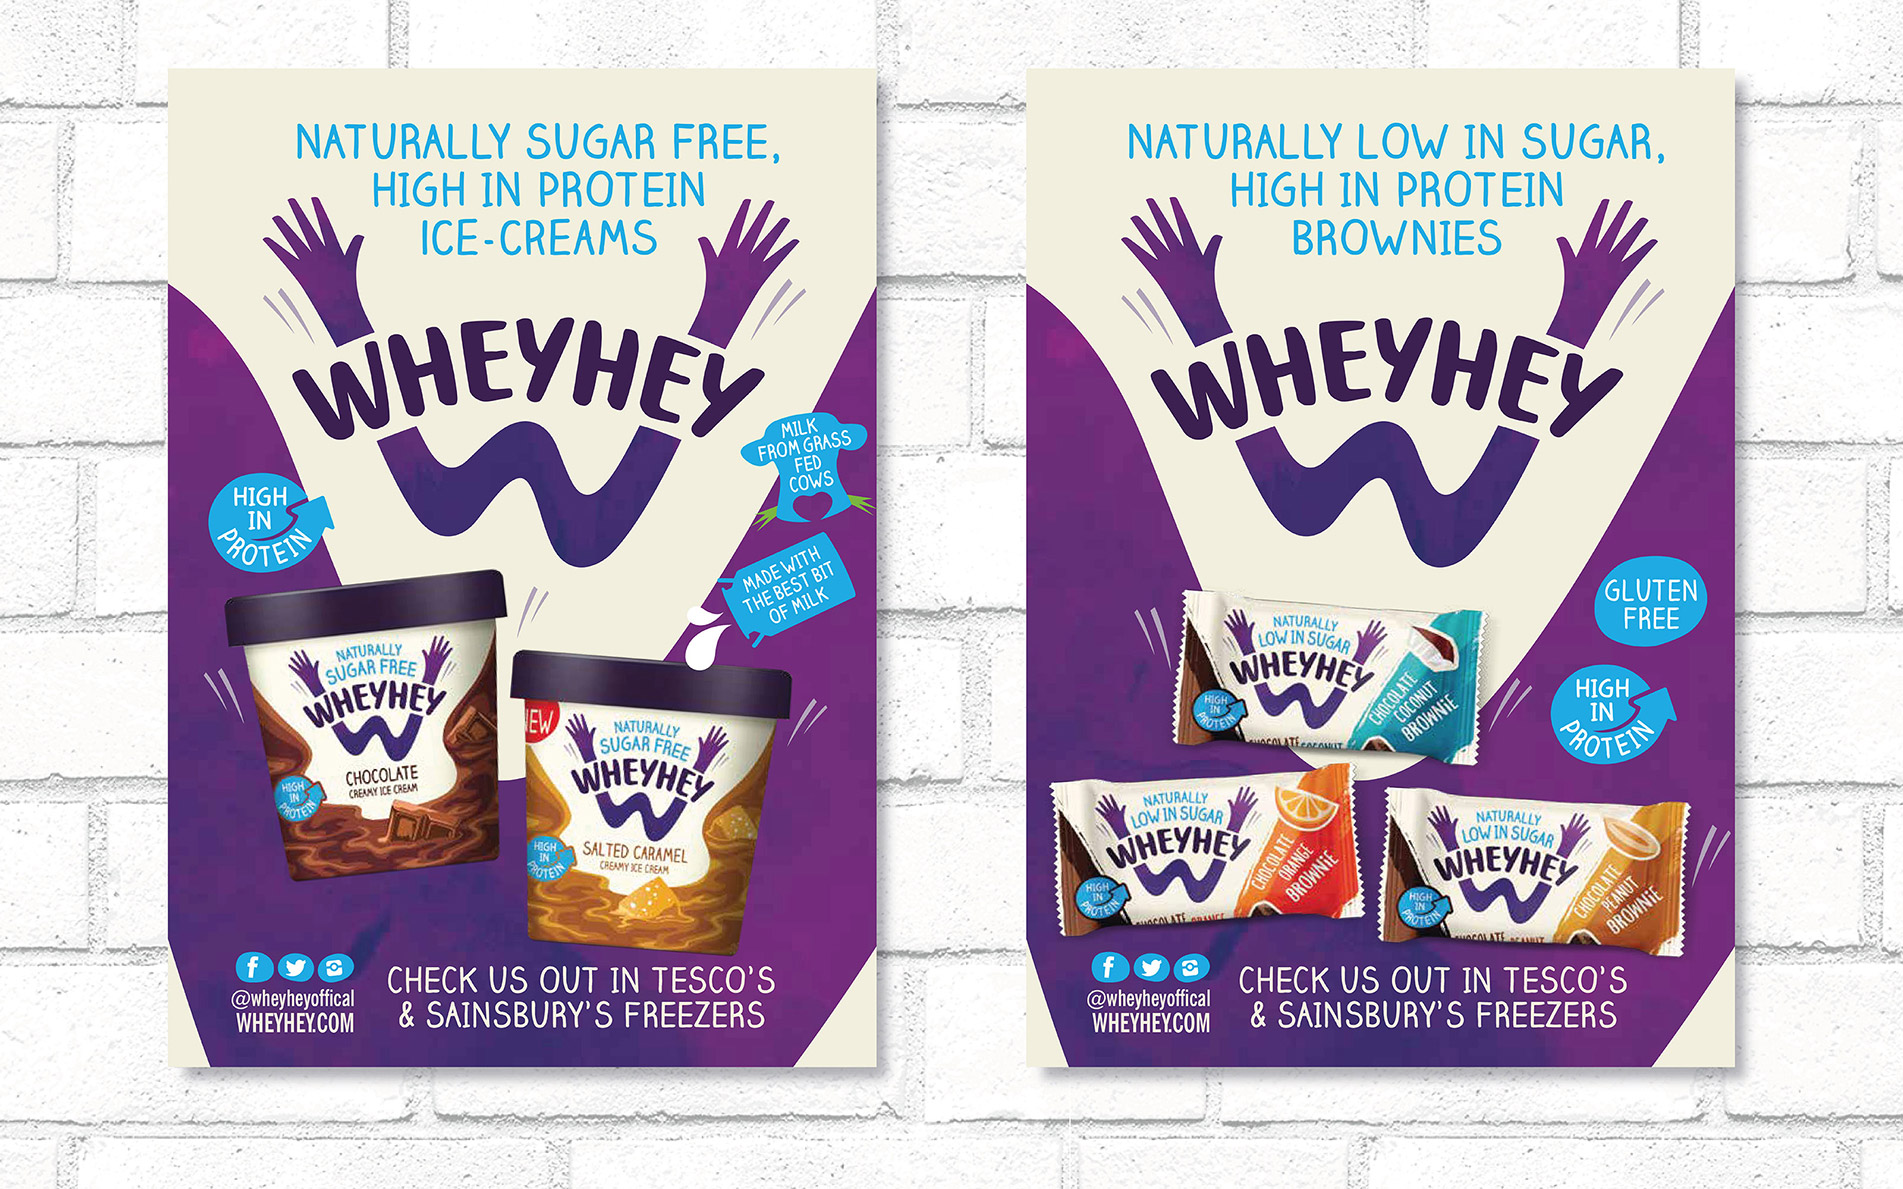 Wheyhey sugar free foods brand guidlines - Rylands Brand Design